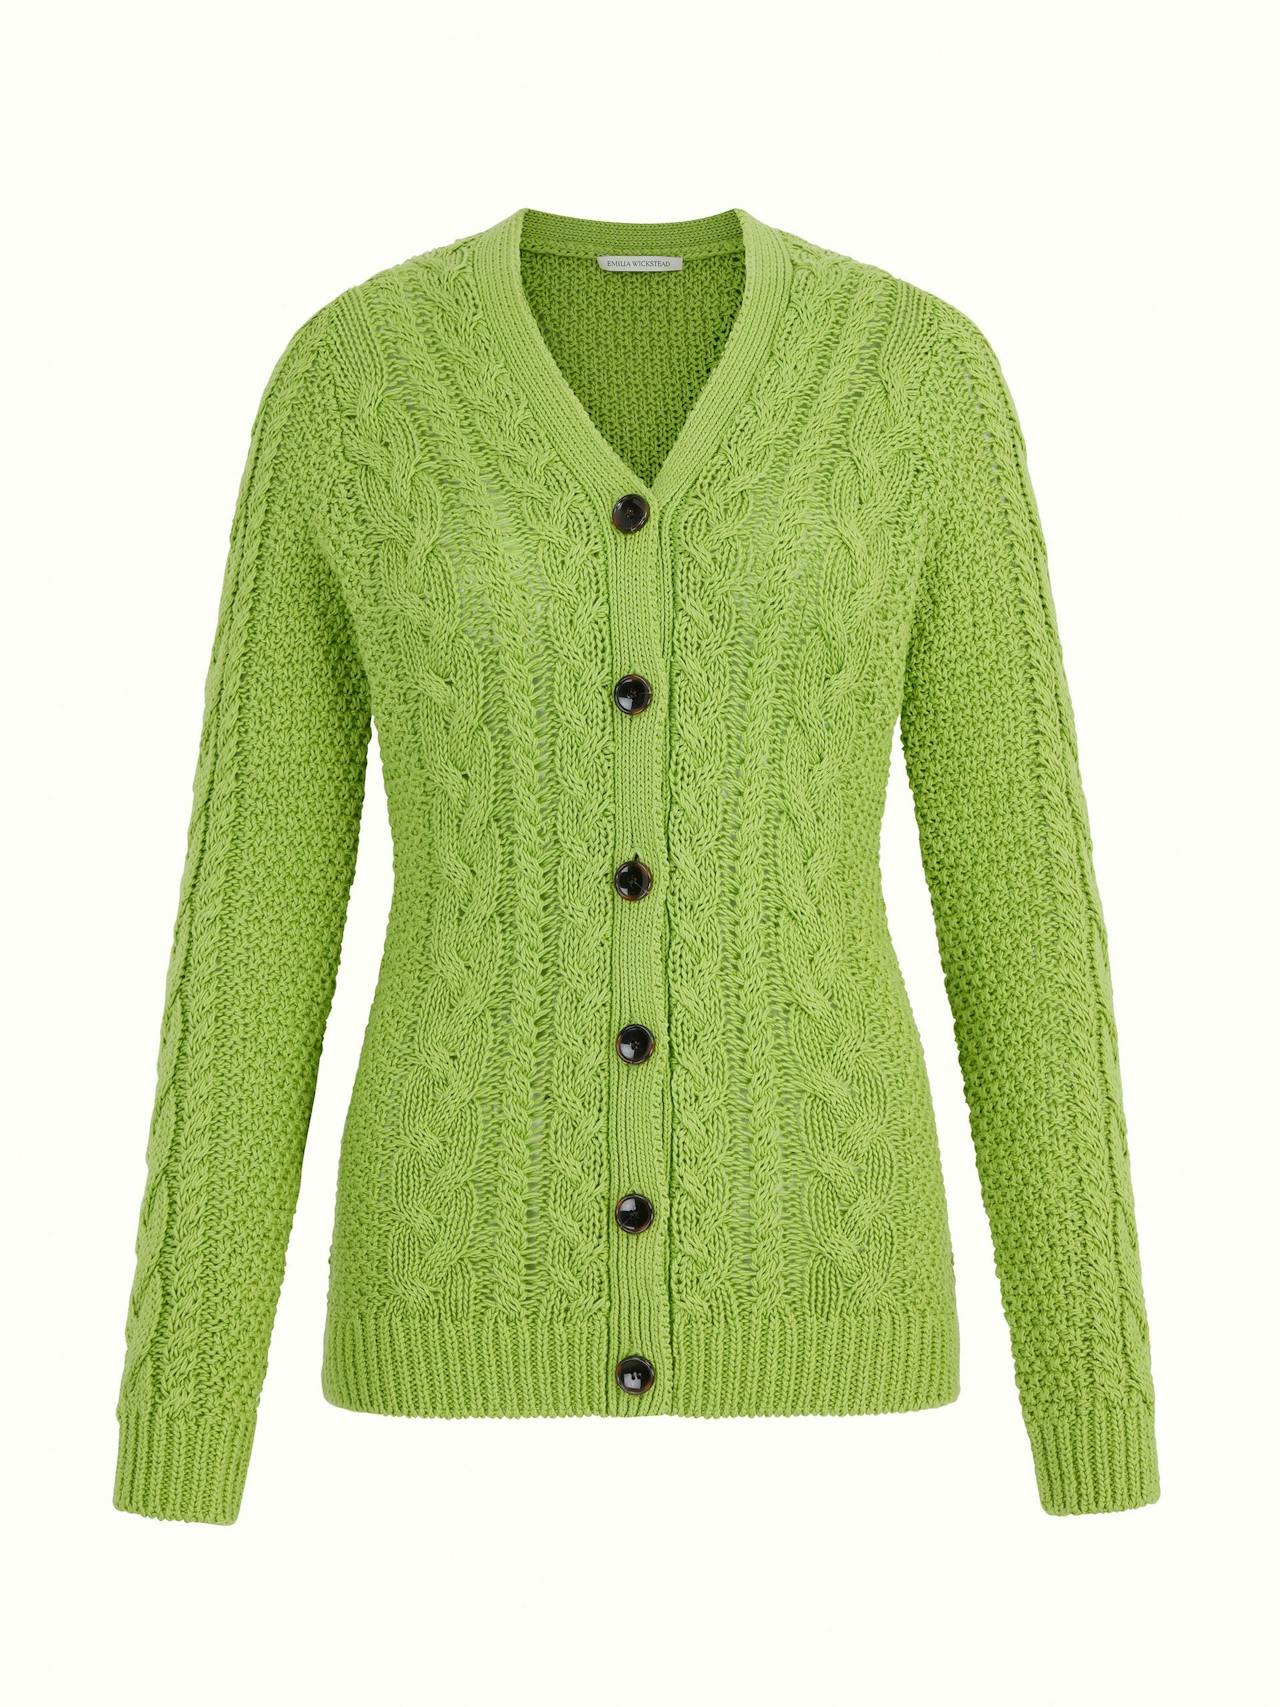 Elmer knit cardigan in green